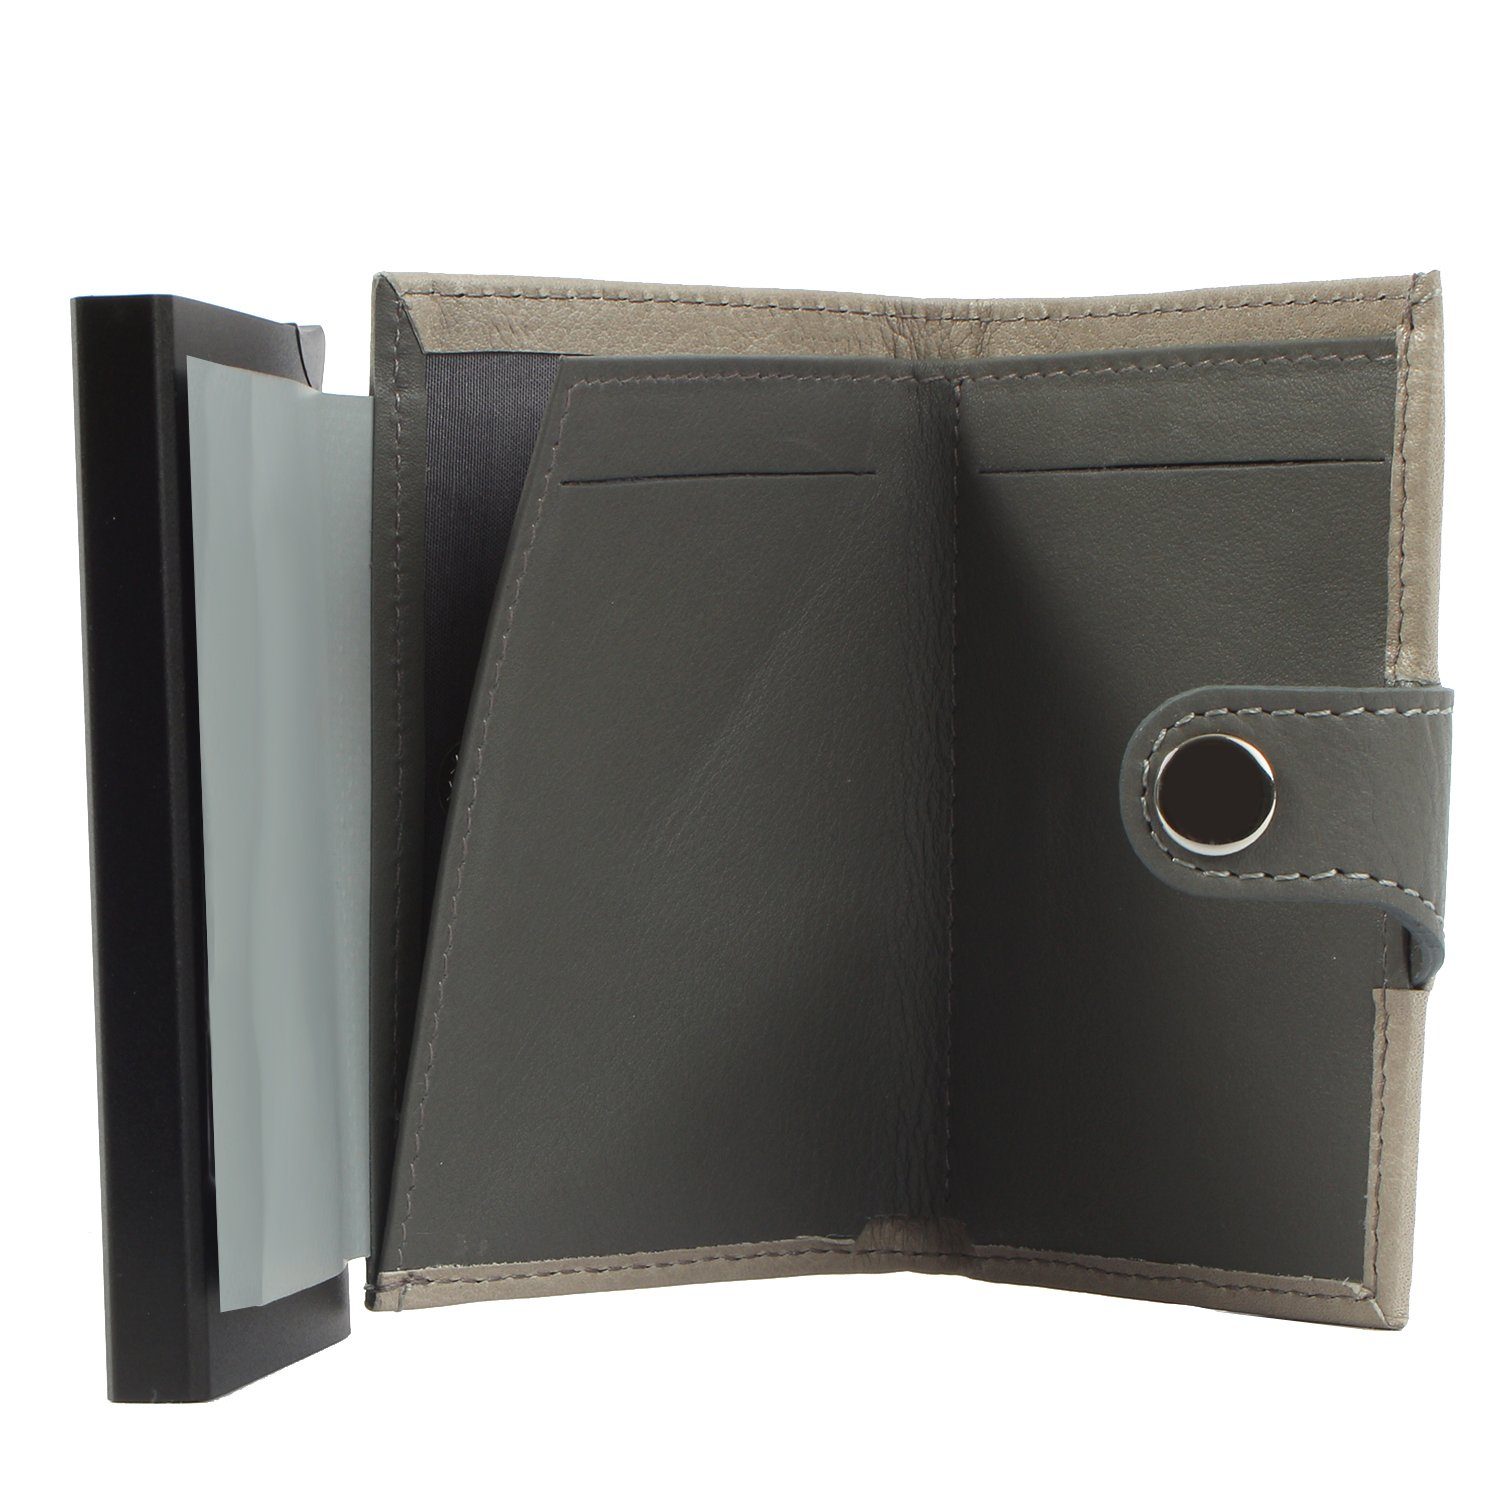 Margelisch Mini Geldbörse noonyu single Upcycling leather, Kreditkartenbörse aus silverblue Leder